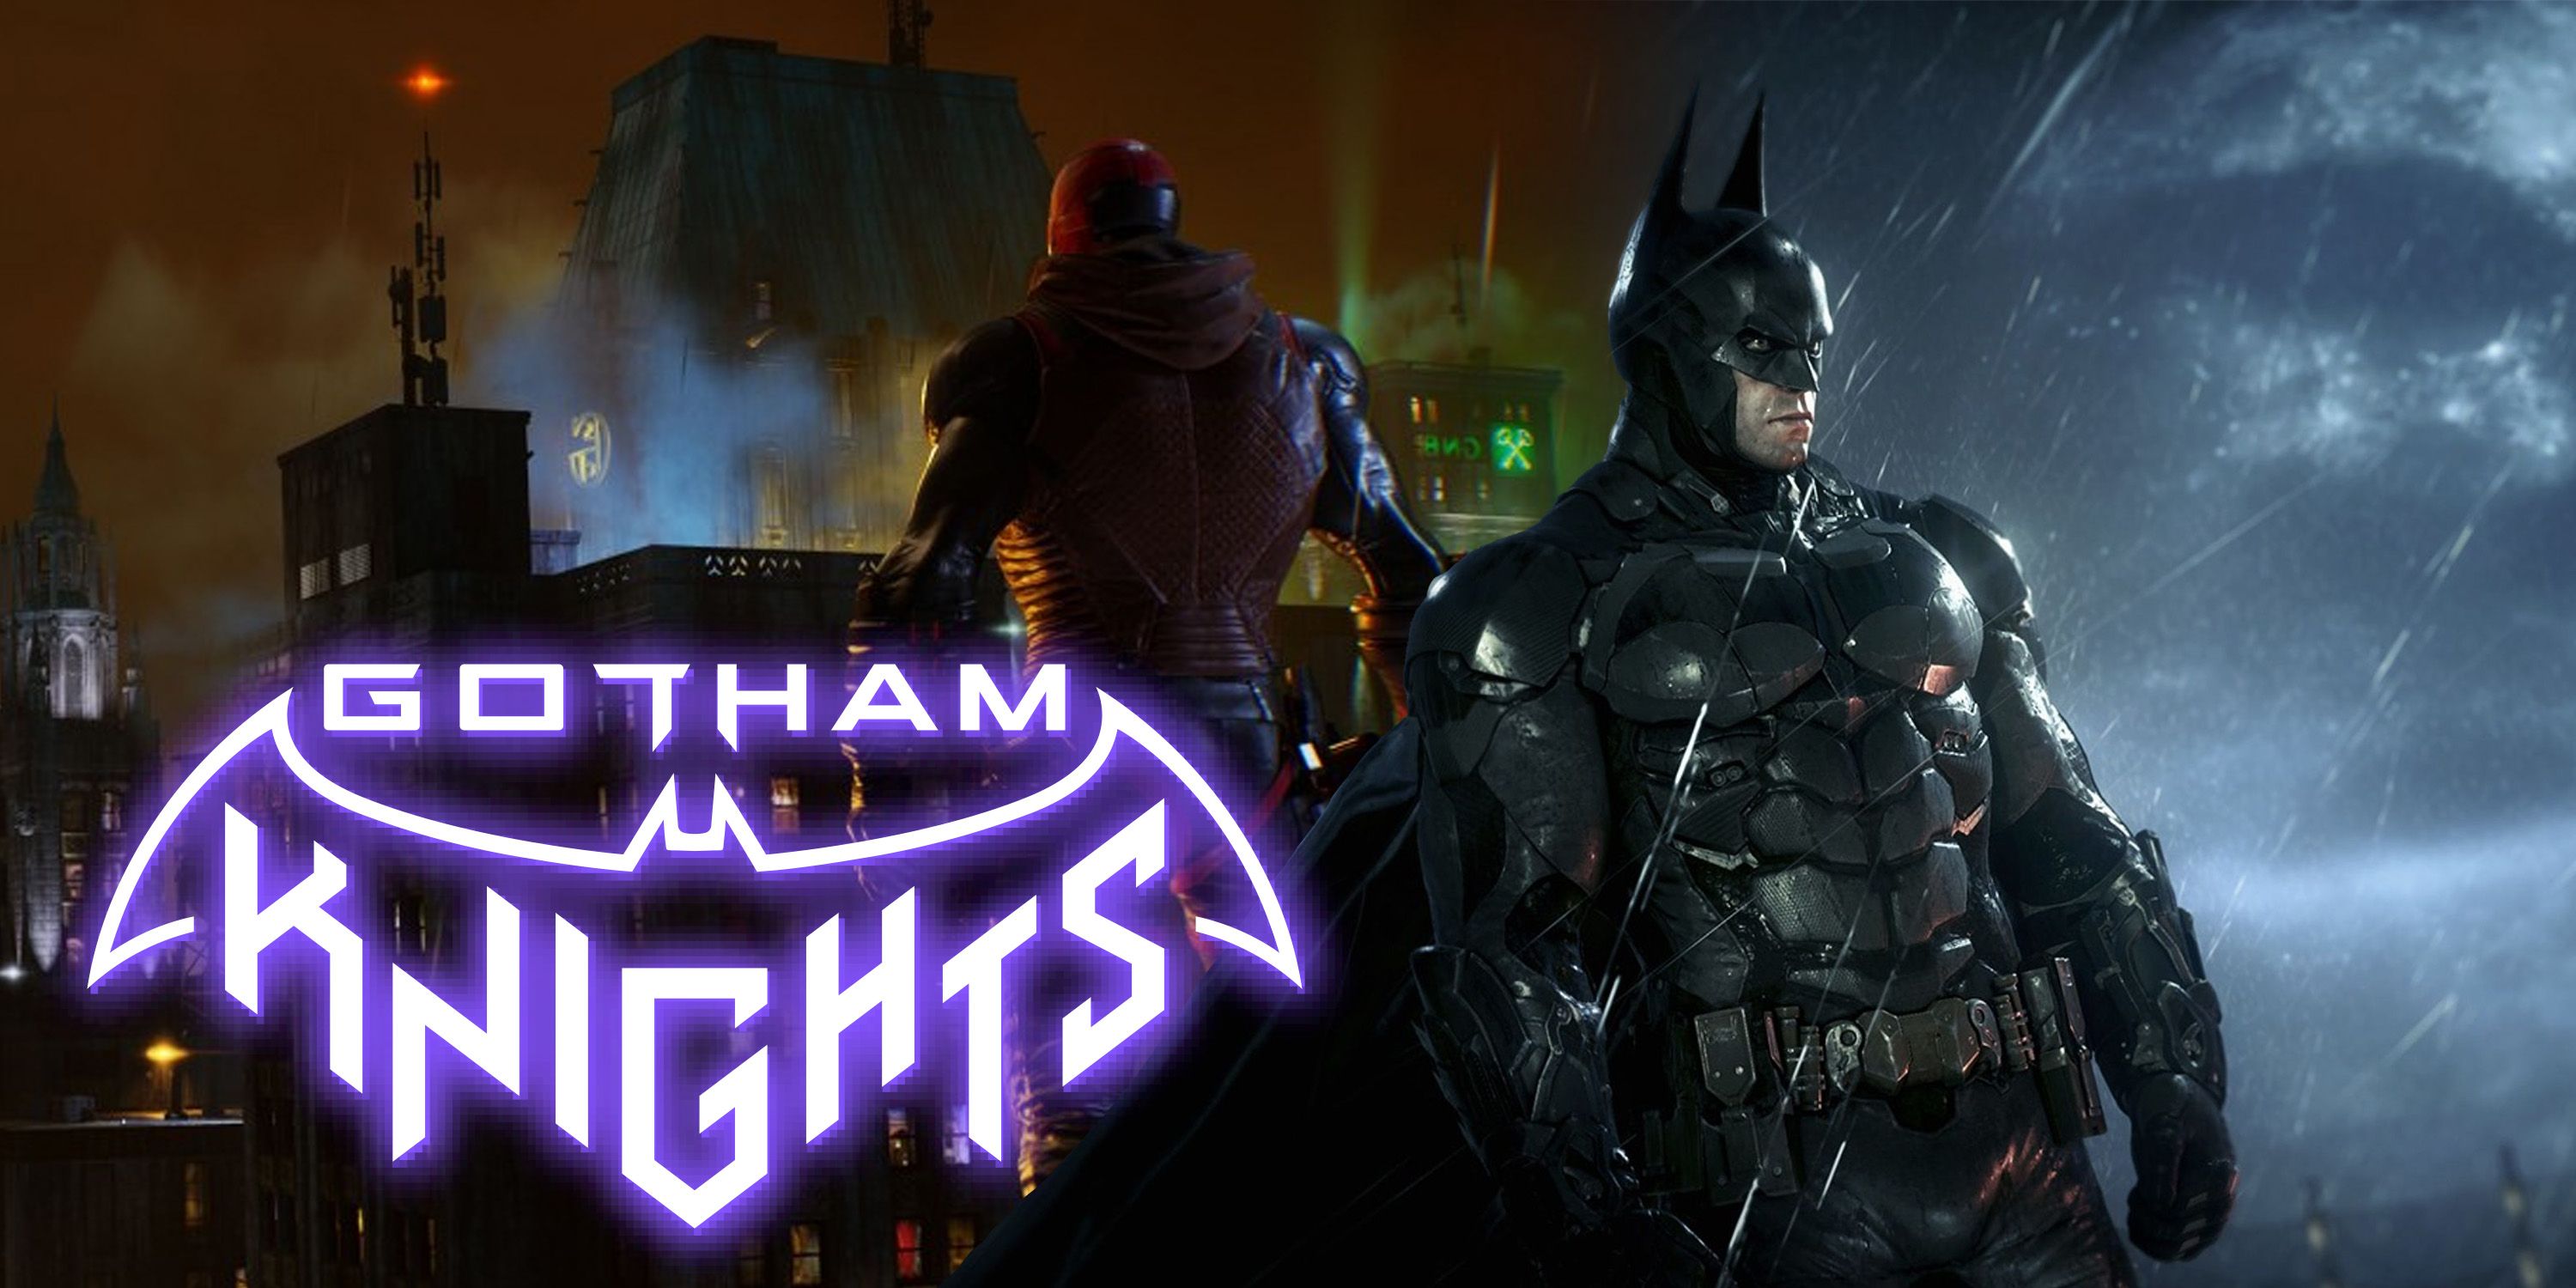 Quick gameplay comparison between the latest Gotham knights reveal and  Arkham knight : r/BatmanArkham